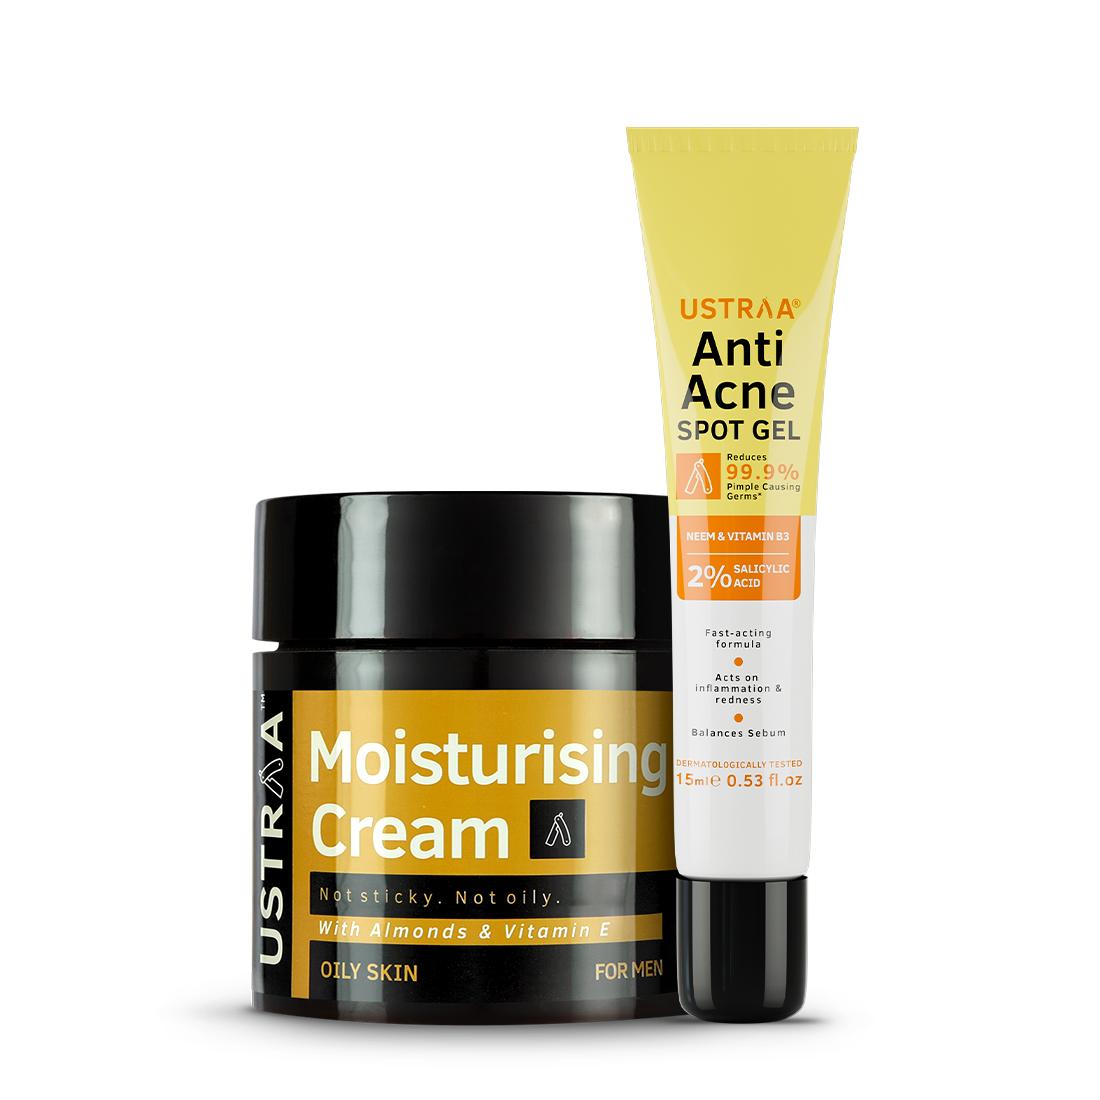 Anti Acne Spot Gel & Moisturising cream Oily Skin